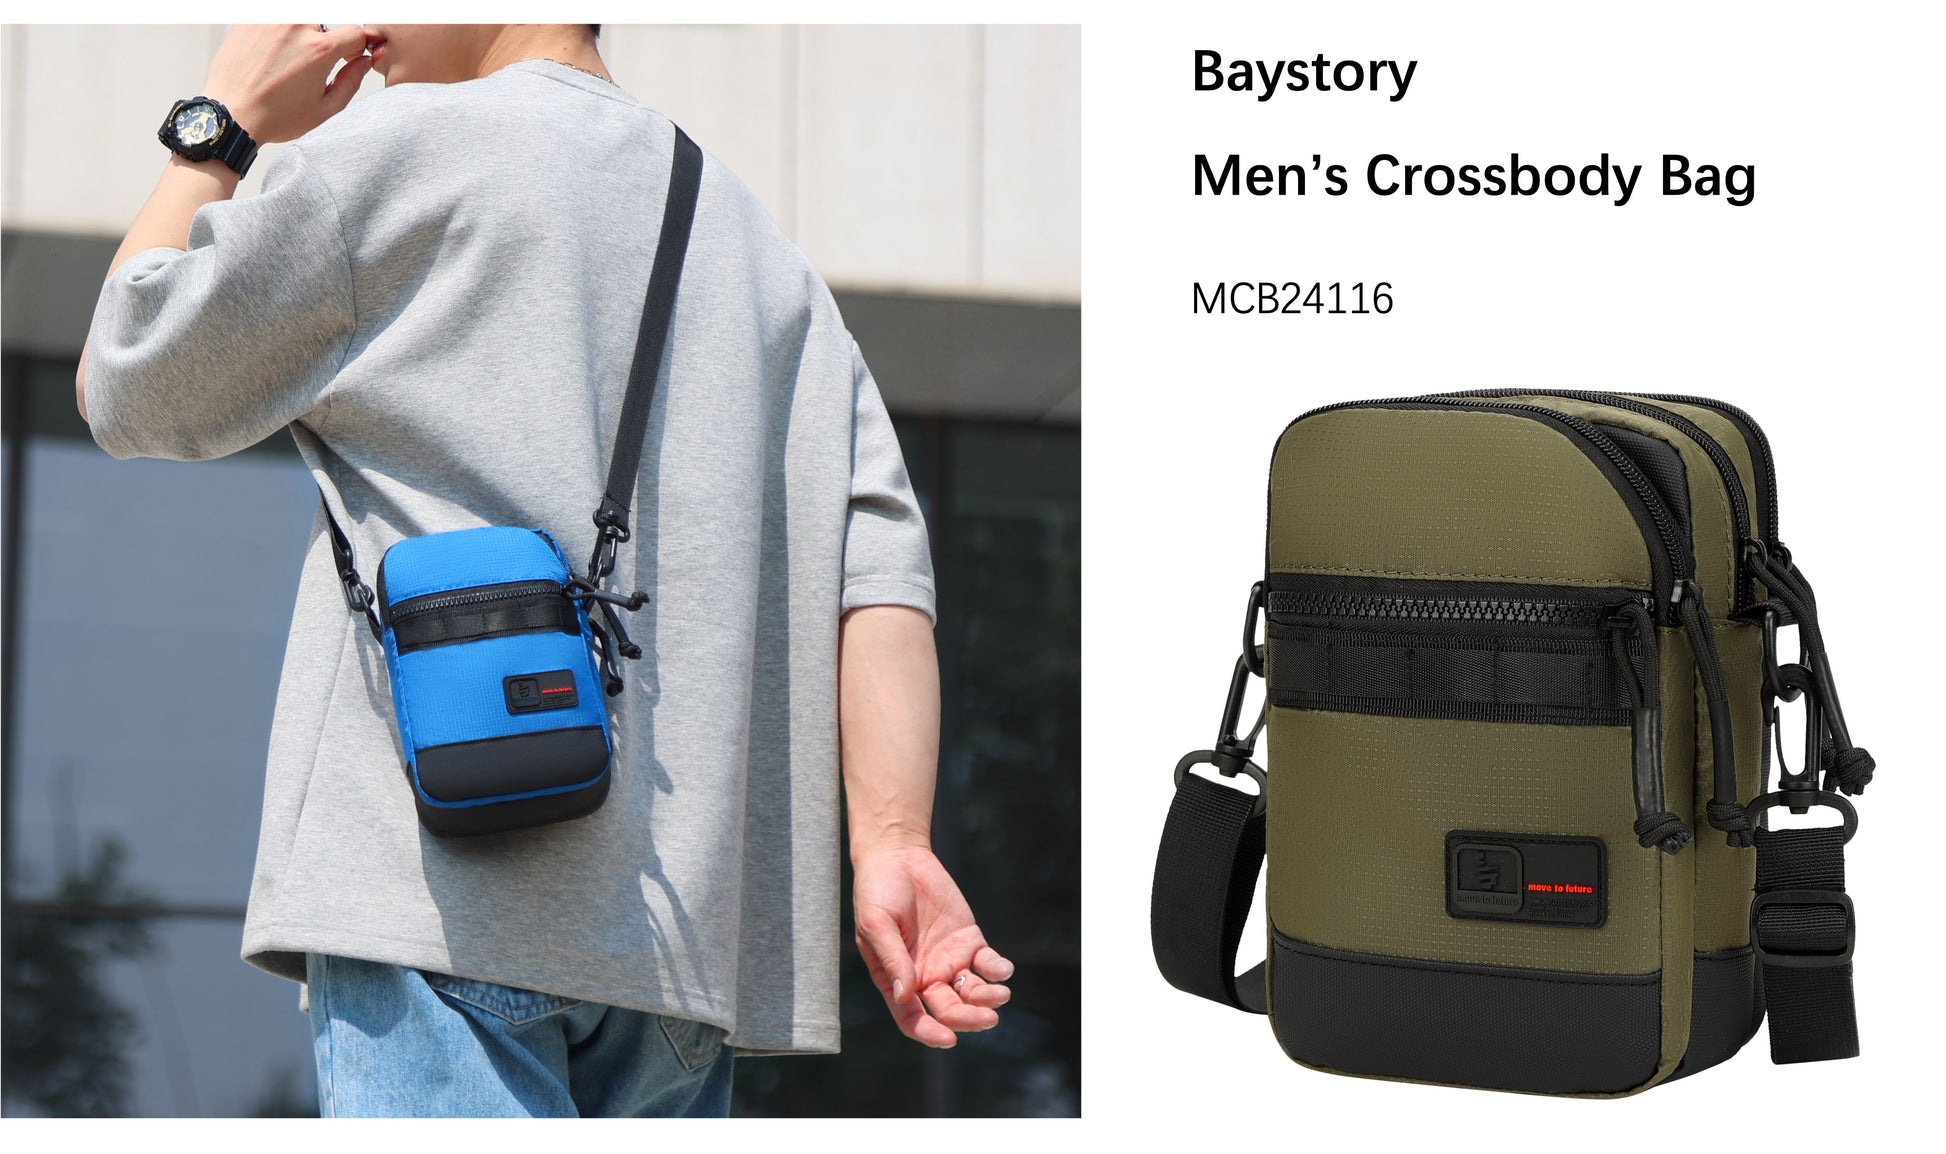 Baystory Men’s Crossbody Bag MCB24116 - Baystory